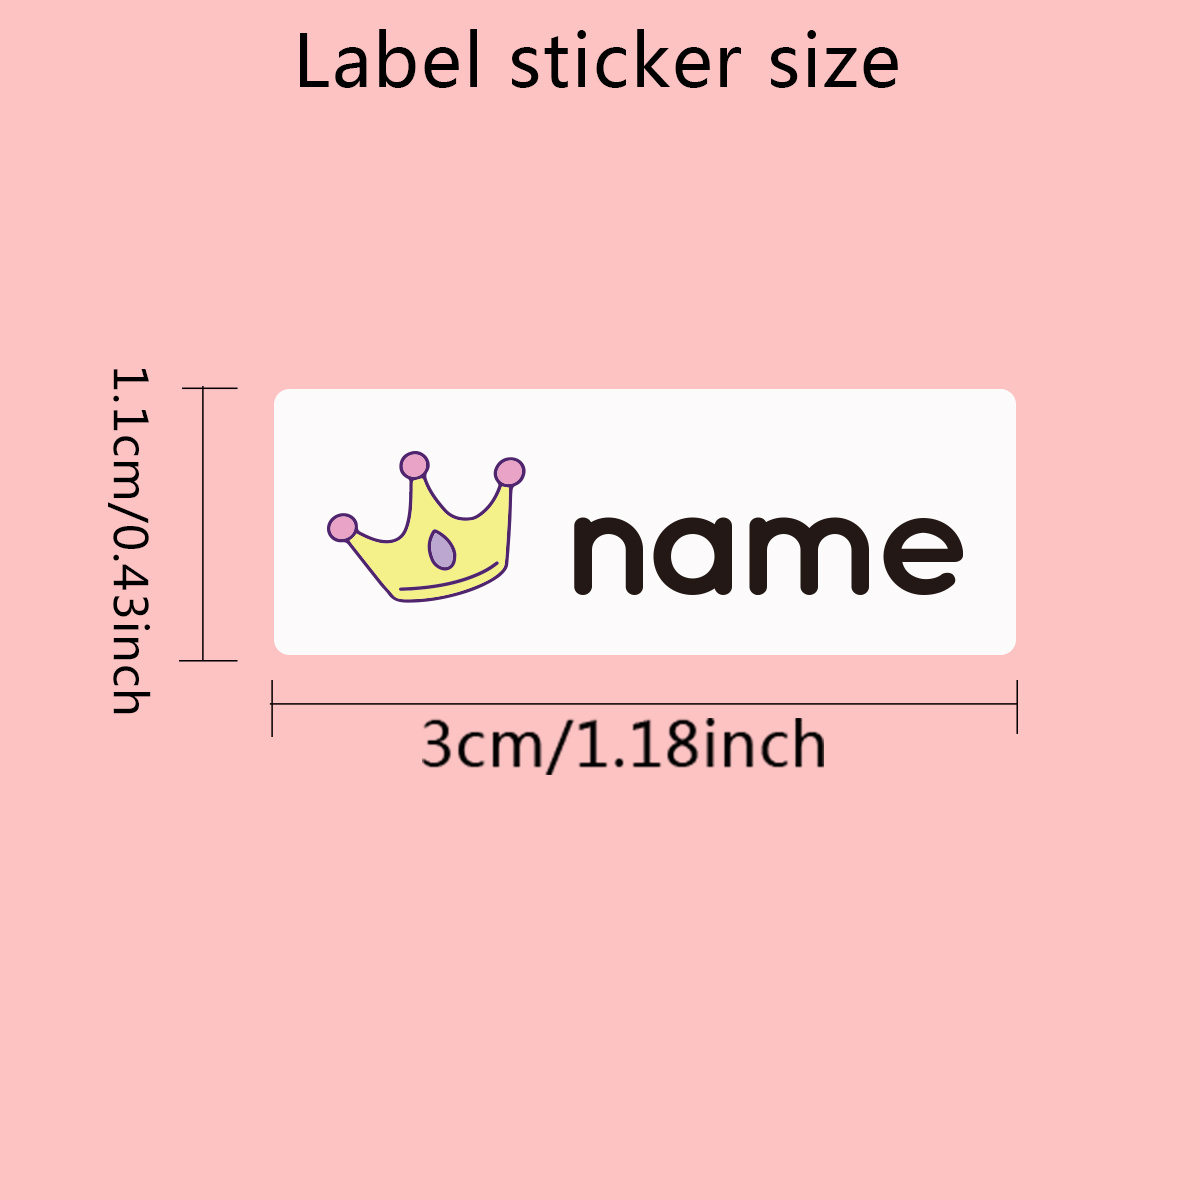 Custom name tag stickers